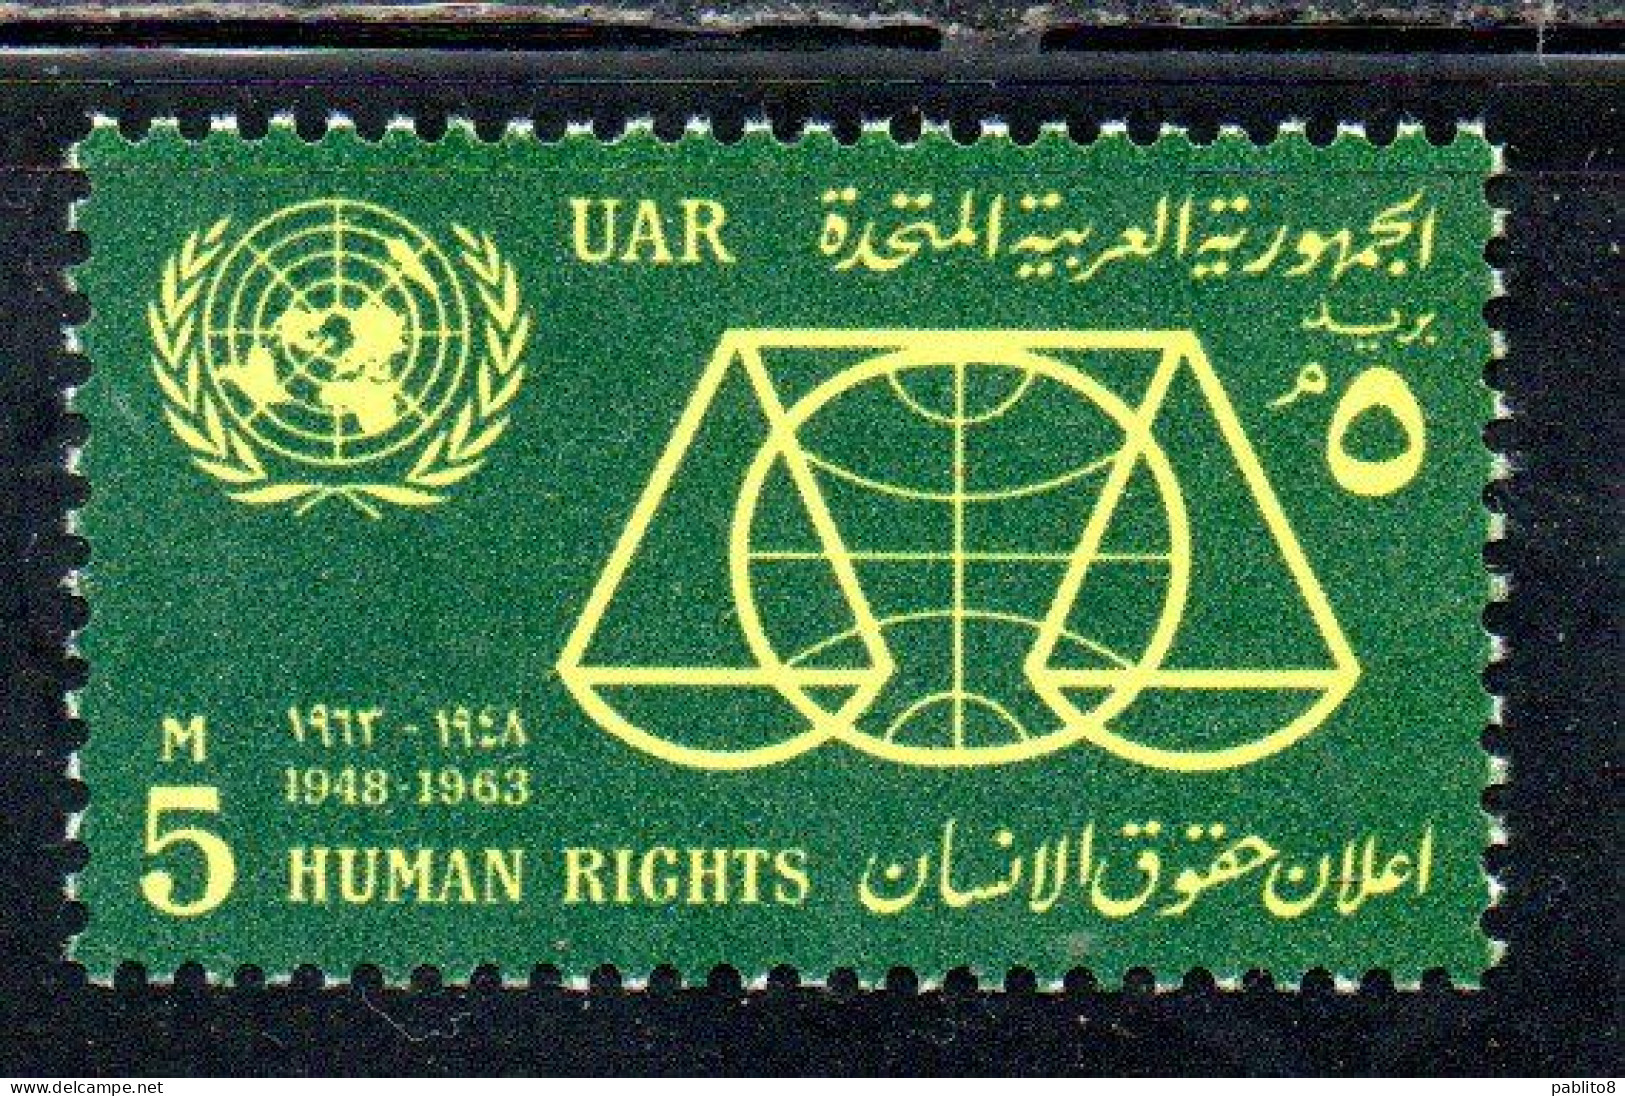 UAR EGYPT EGITTO 1963 15th ANNIVERSARY OF THE UNIVERSAL DECLARATION OF HUMAN RIGHTS 5m MNH - Nuevos